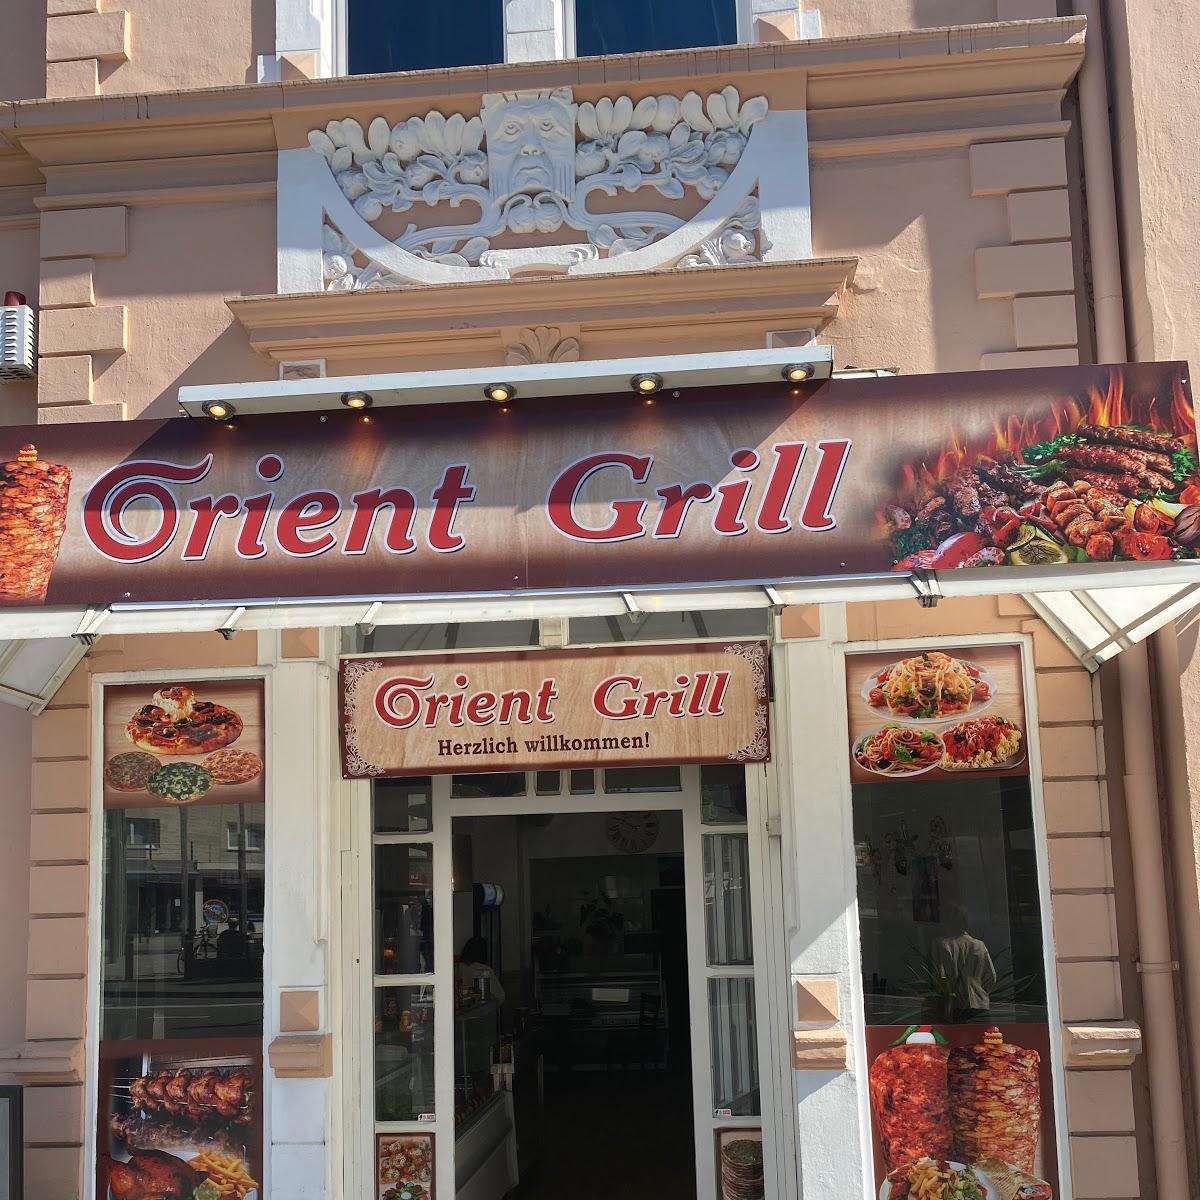 Restaurant "Orient Grill" in Troisdorf